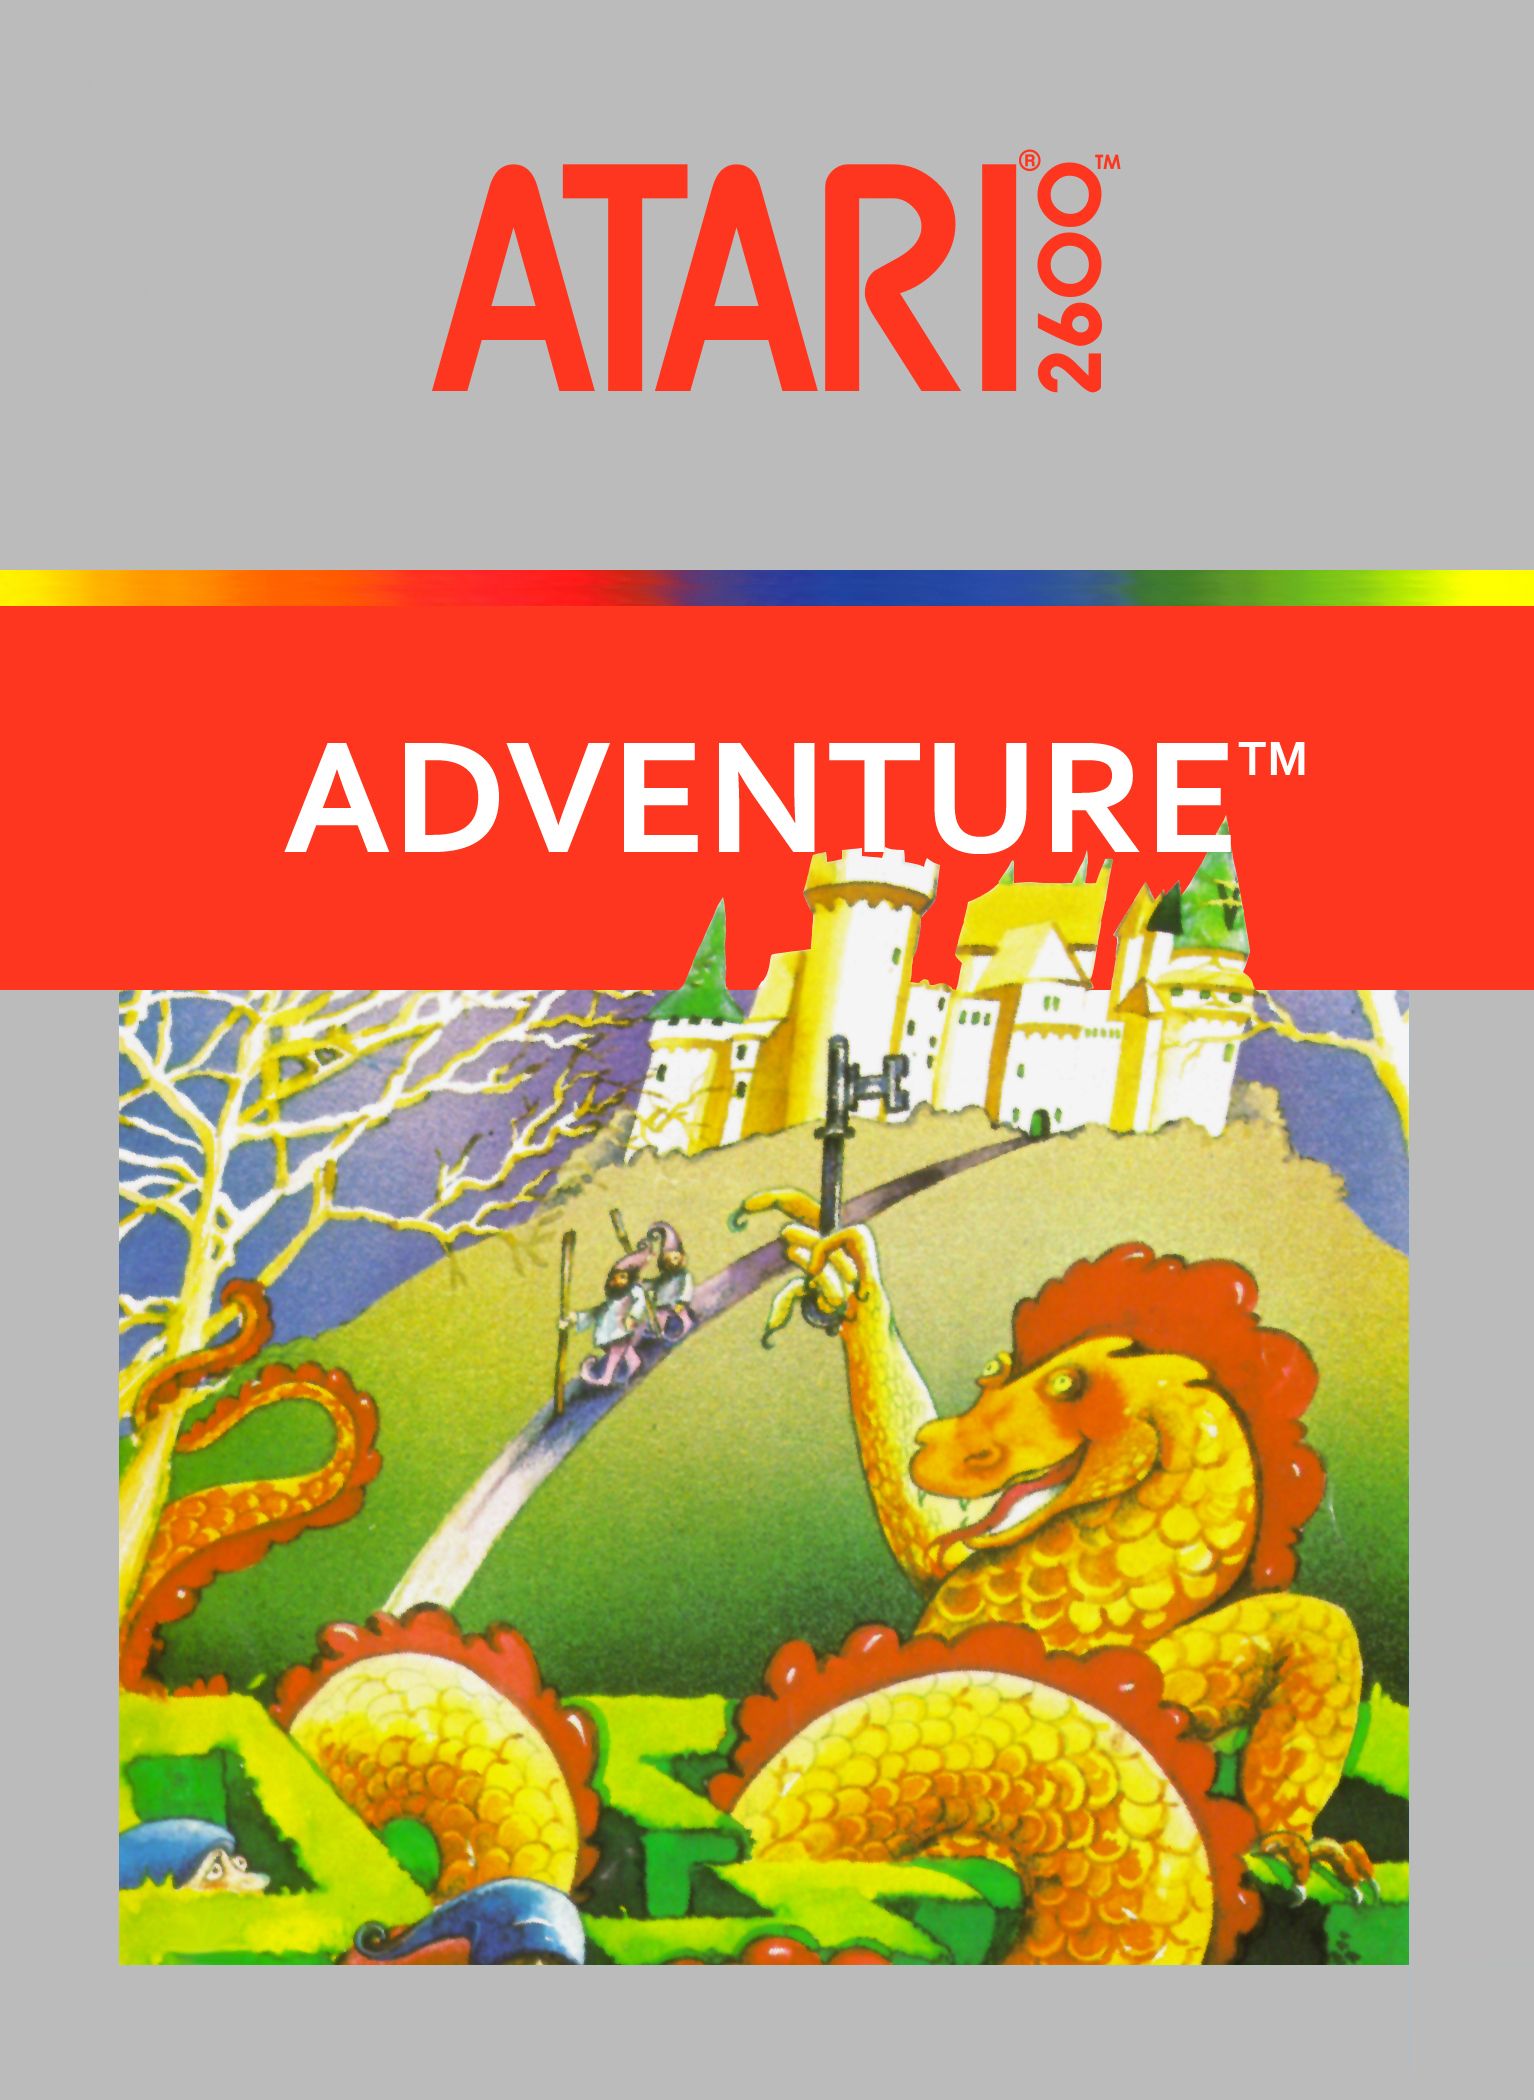 Atari 2600 Adventure game